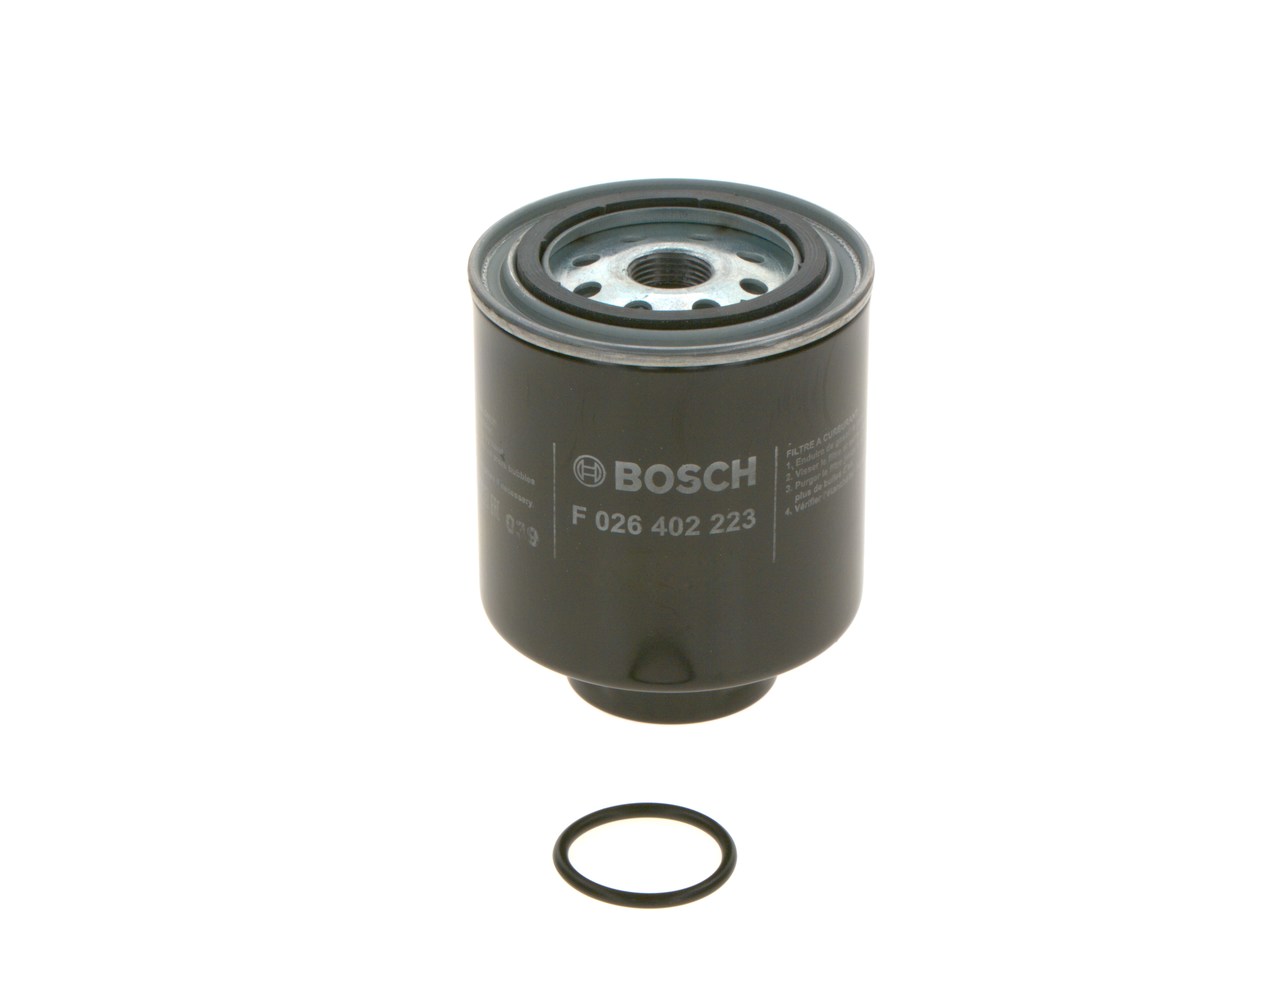 Fuel Filter - F026402223 BOSCH - 1770A012, 1770A374, 24.119.00